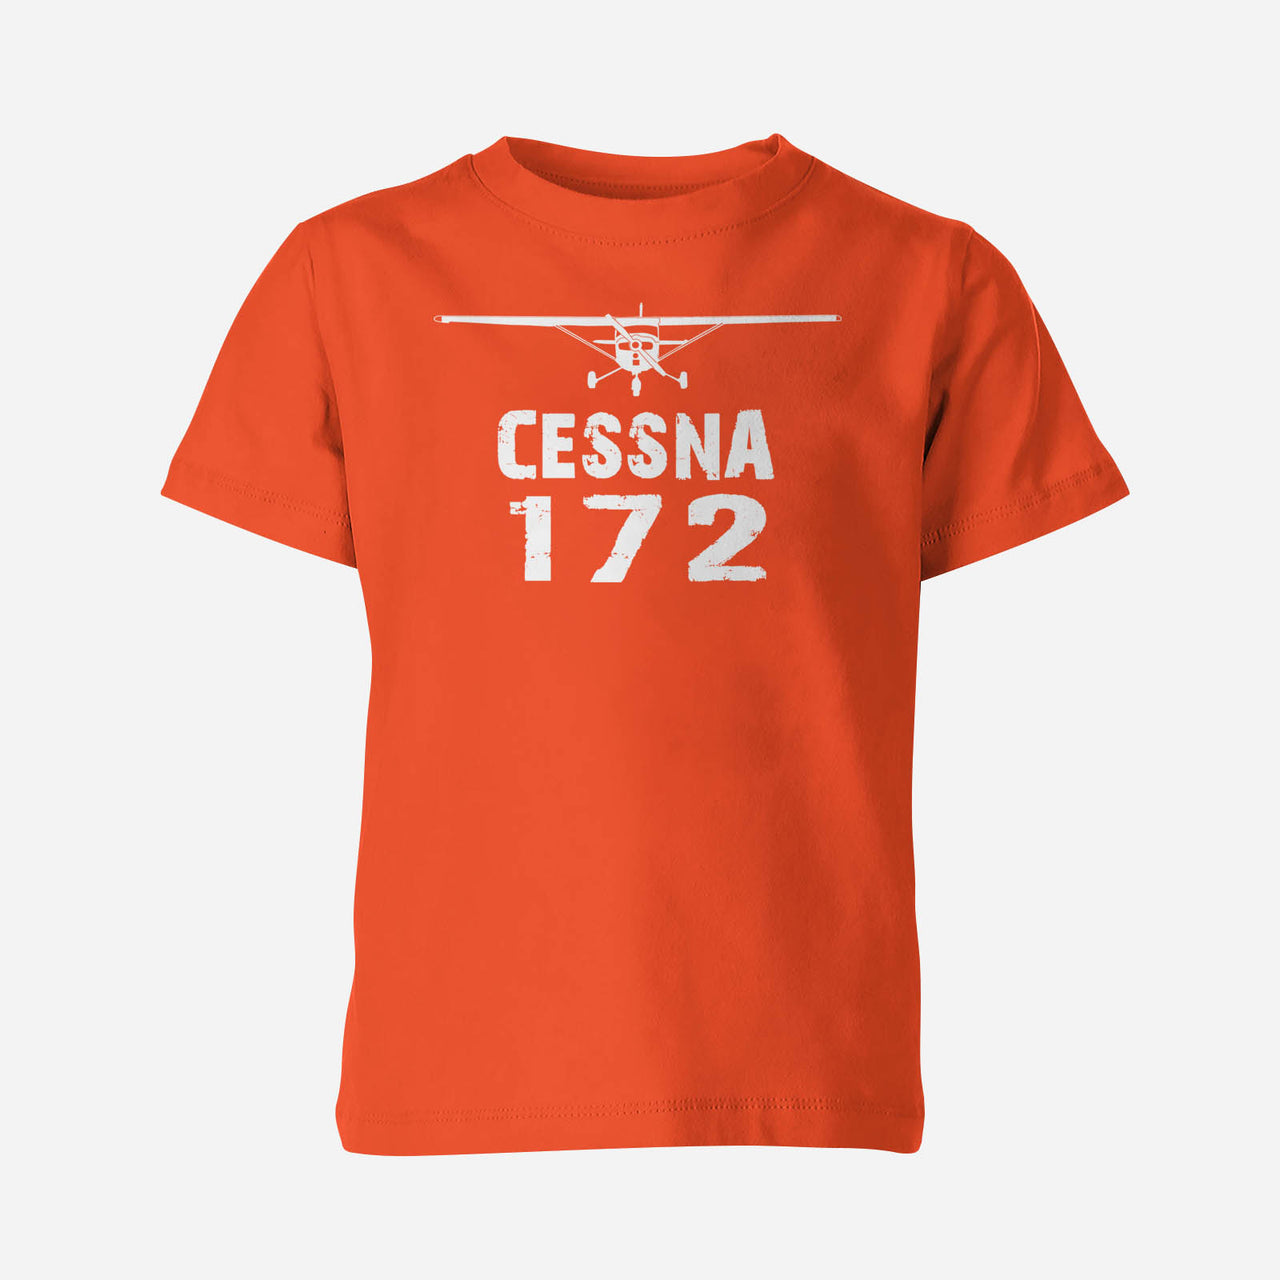 Cessna 172 & Plane Designed Children T-Shirts